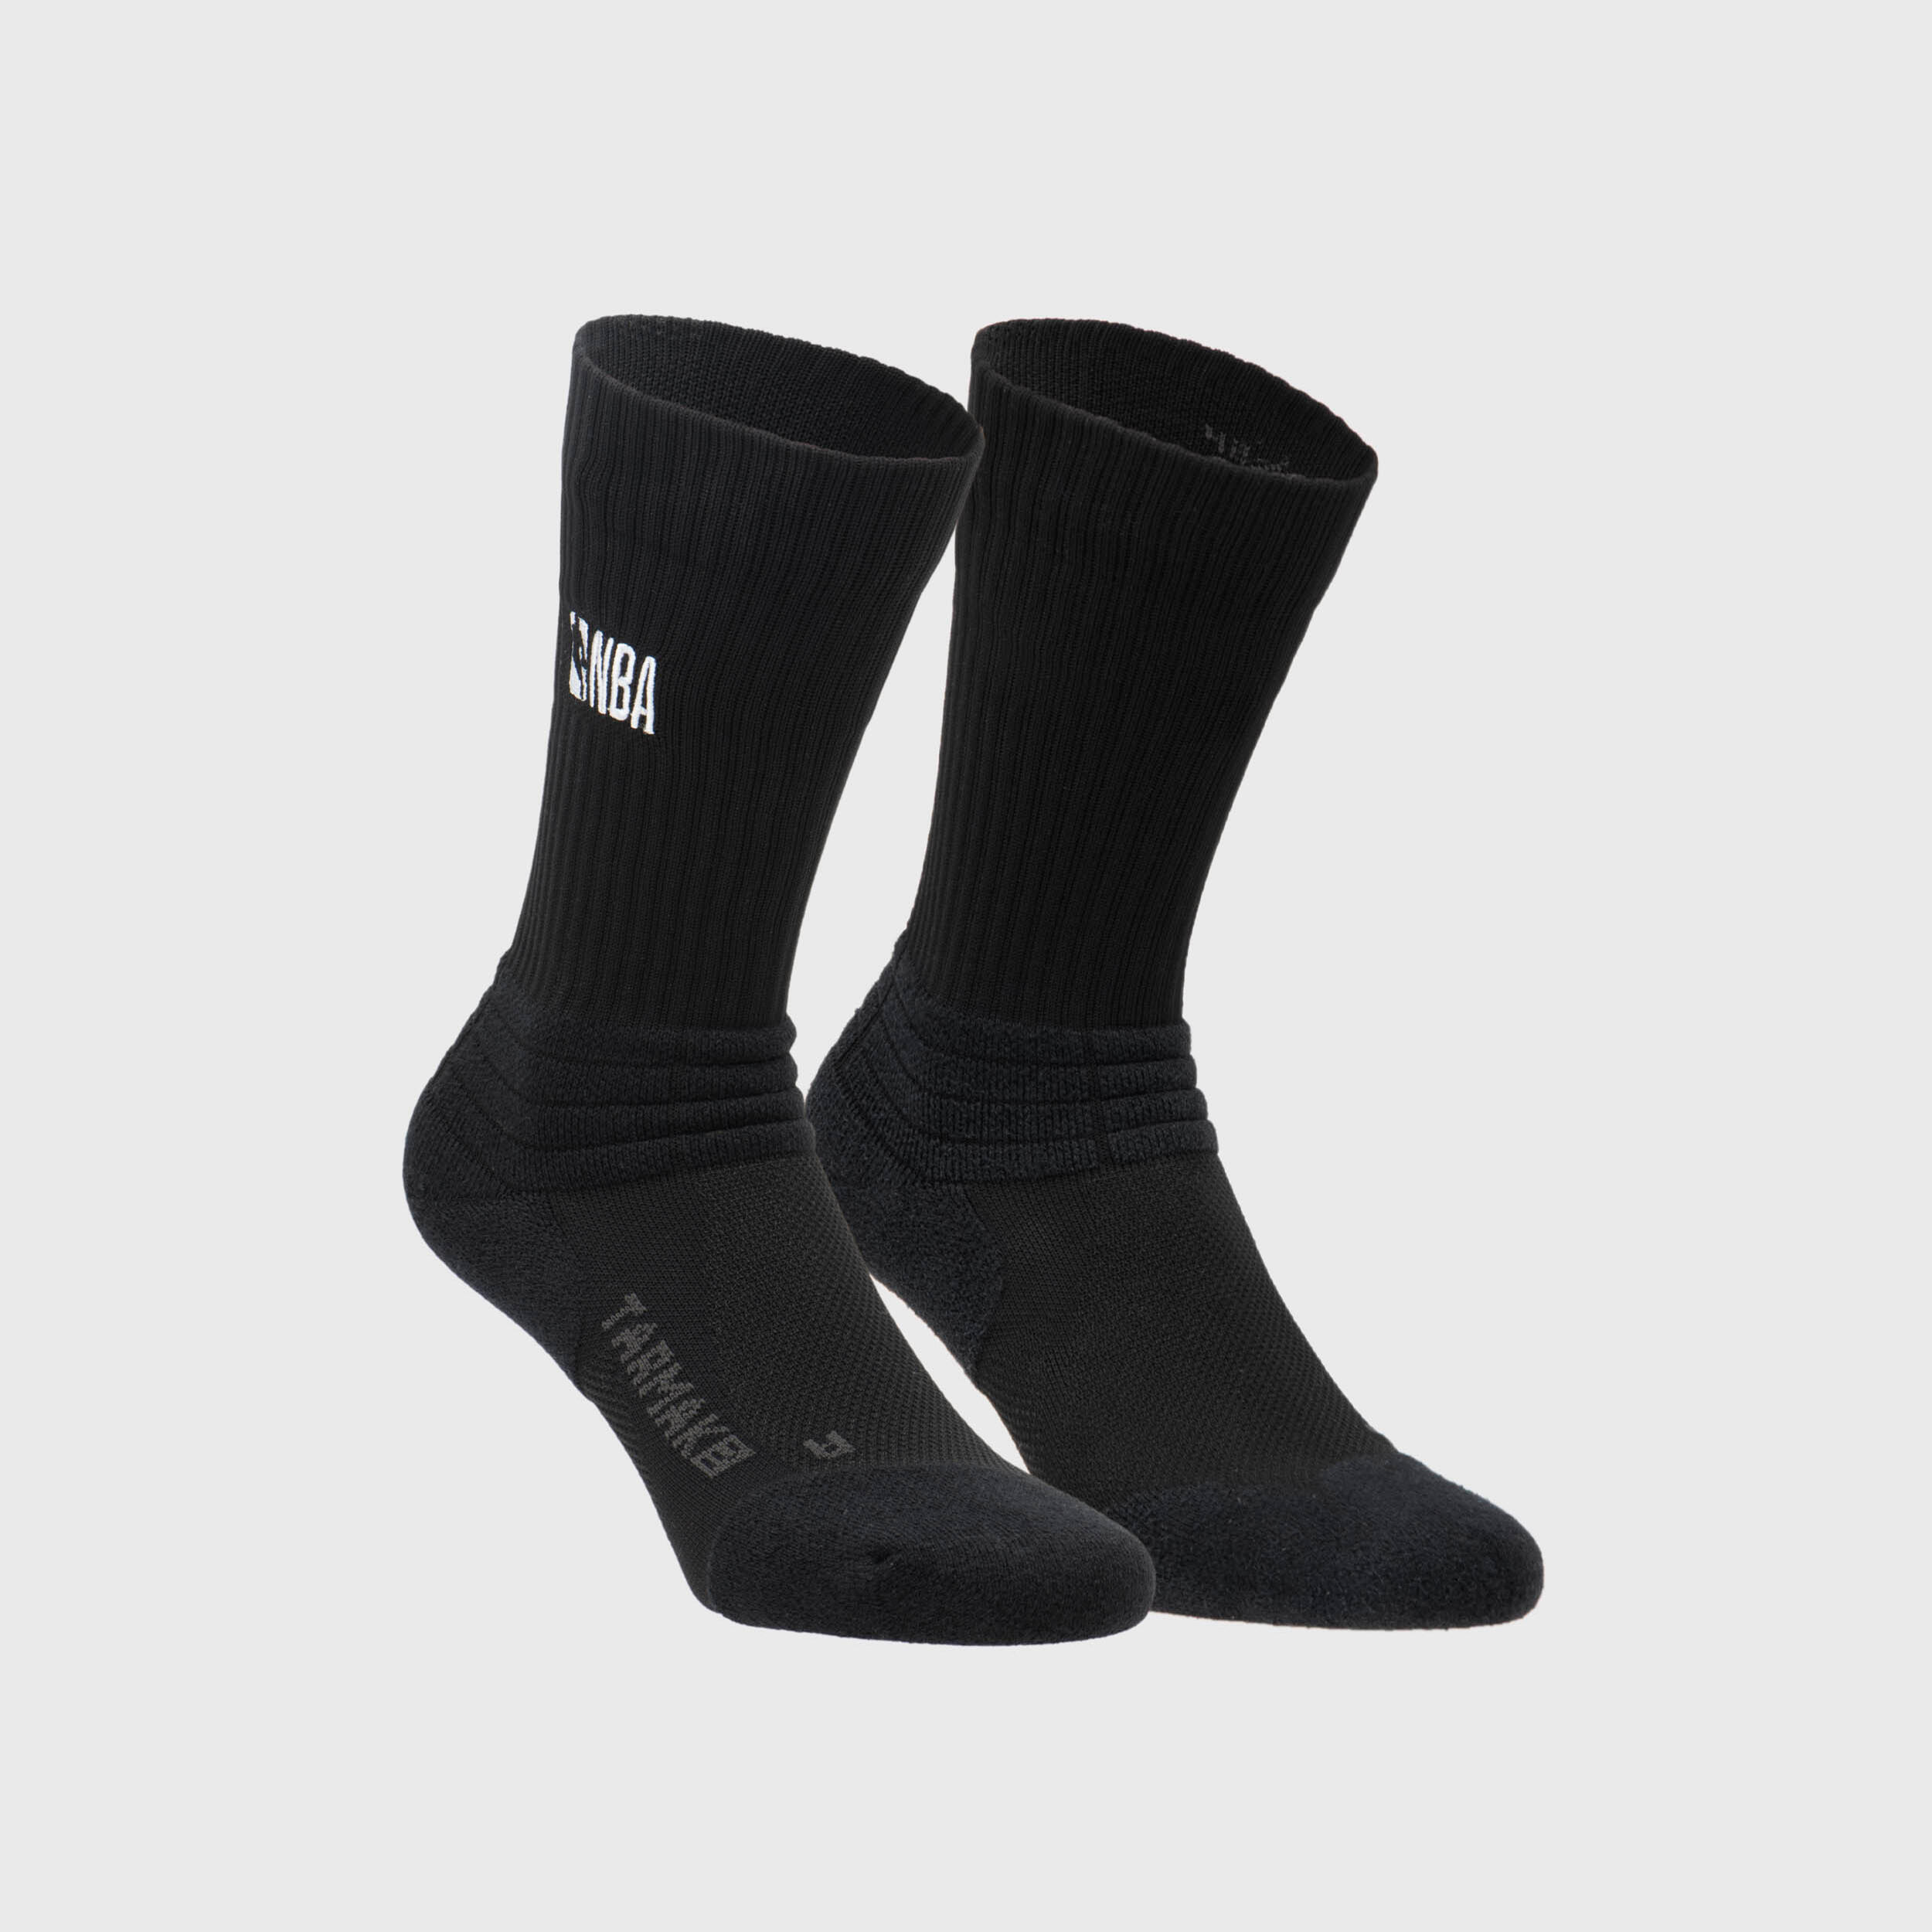 Men's/Women's Low-Rise NBA Basketball Socks SO900 Twin-Pack - Black 2/6